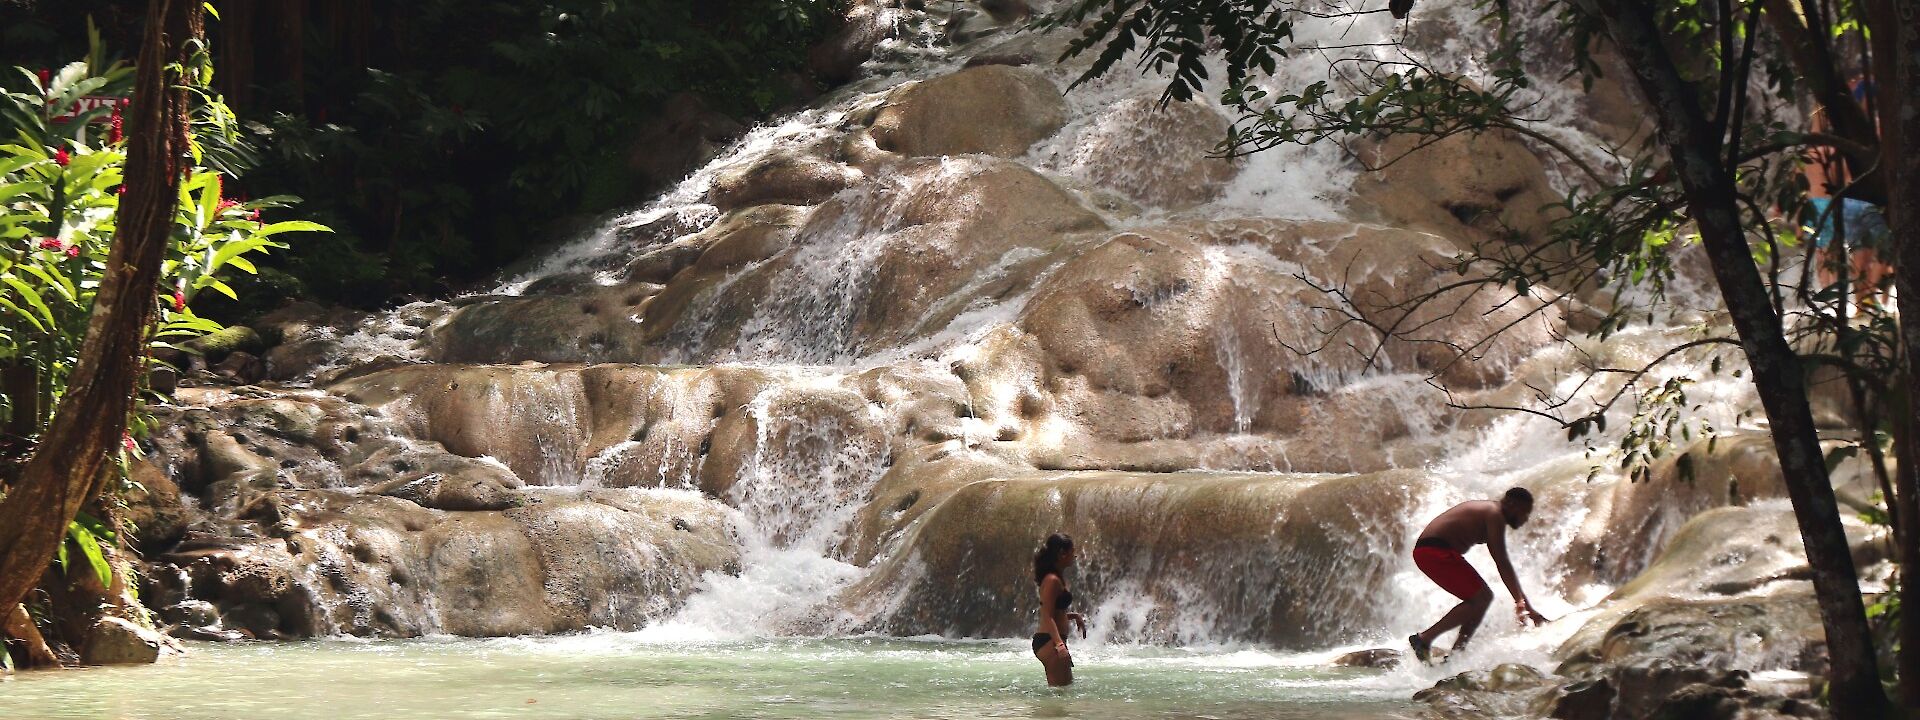 Scaling Dunn's River Falls, Ocho Rios, Jamaica. Flickr: Thank you 24 millions views